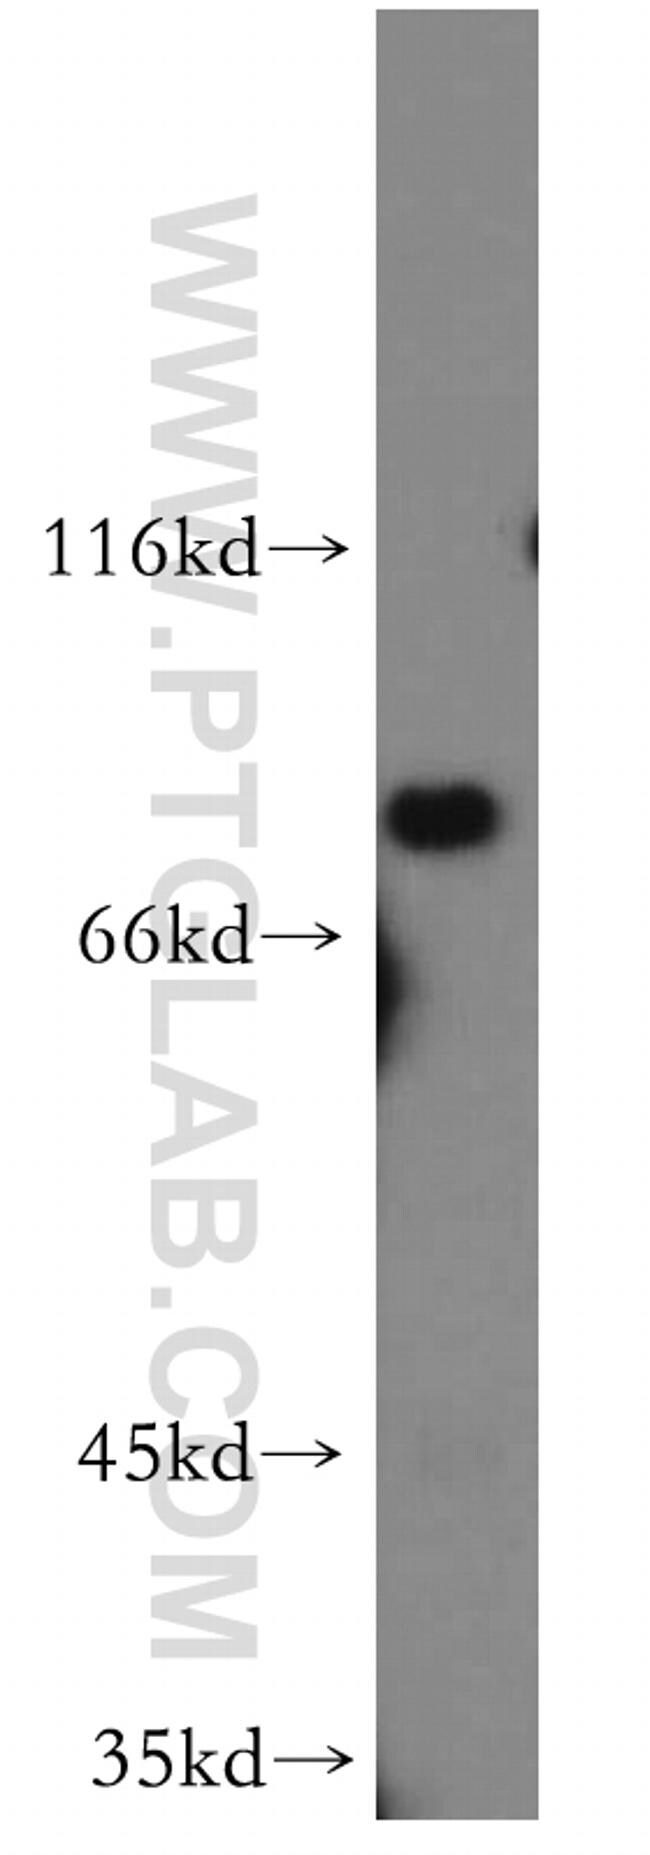 ZDHHC5 Antibody in Western Blot (WB)